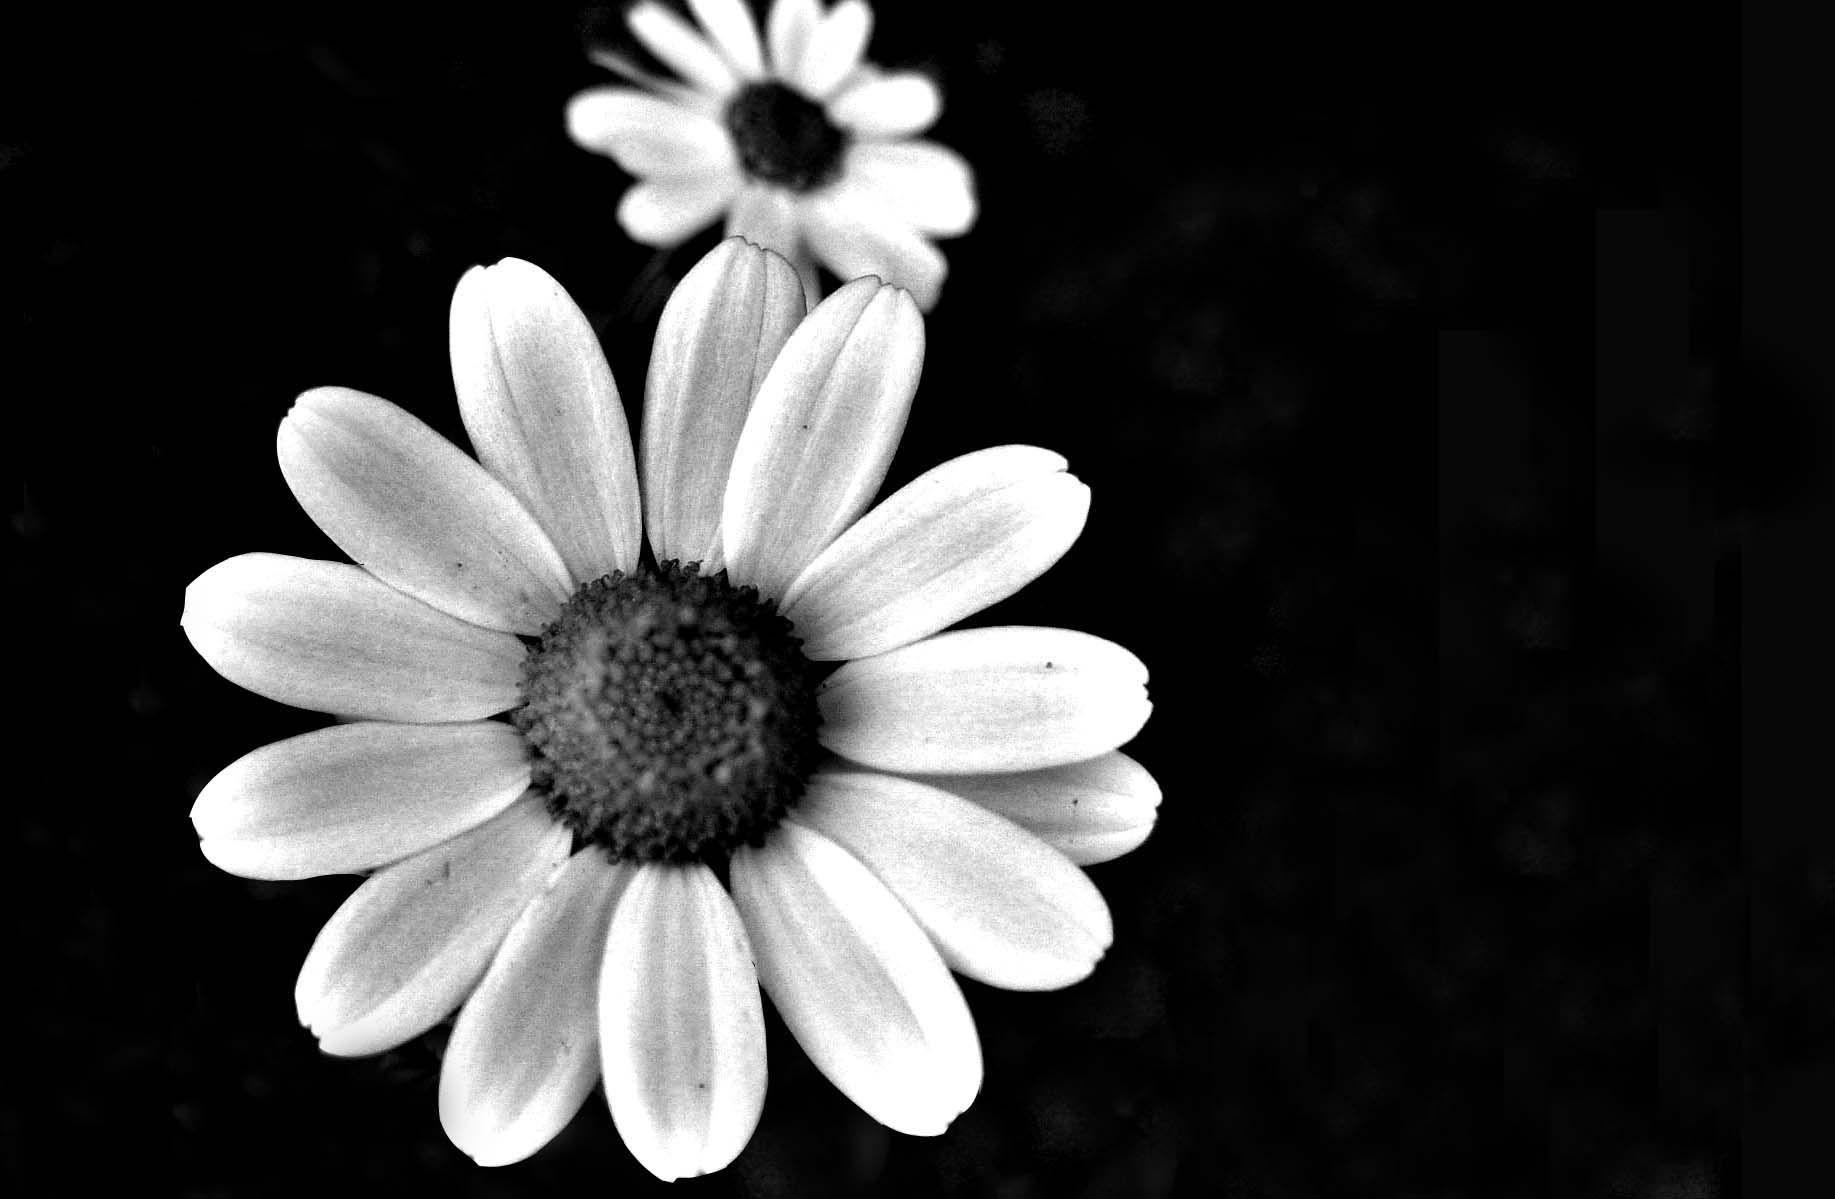 daisy tumblr backgrounds black